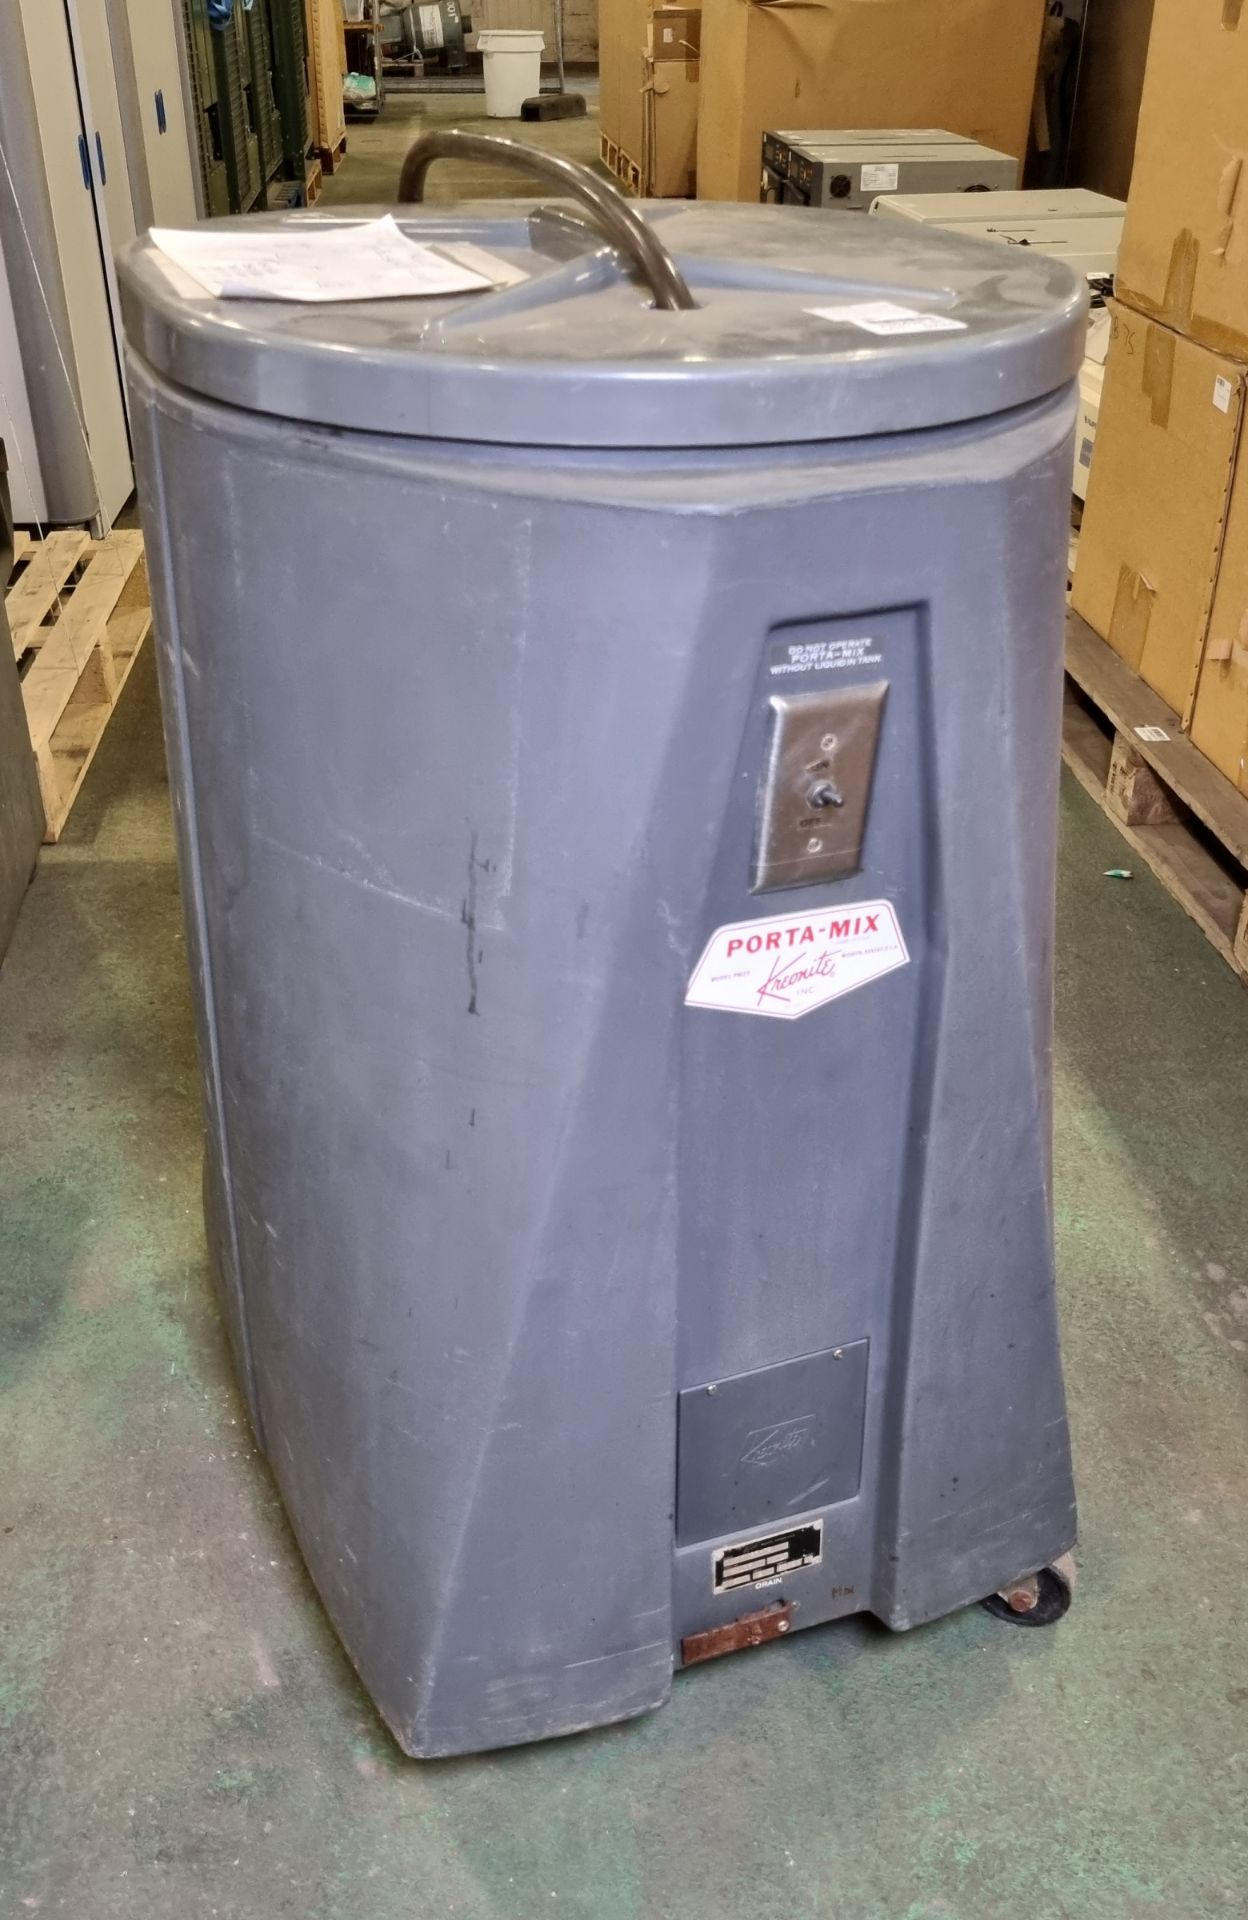 Kreonite Porta-Mix PM25 photographic chemical mixing tank (missing wheel) - 100L capacity